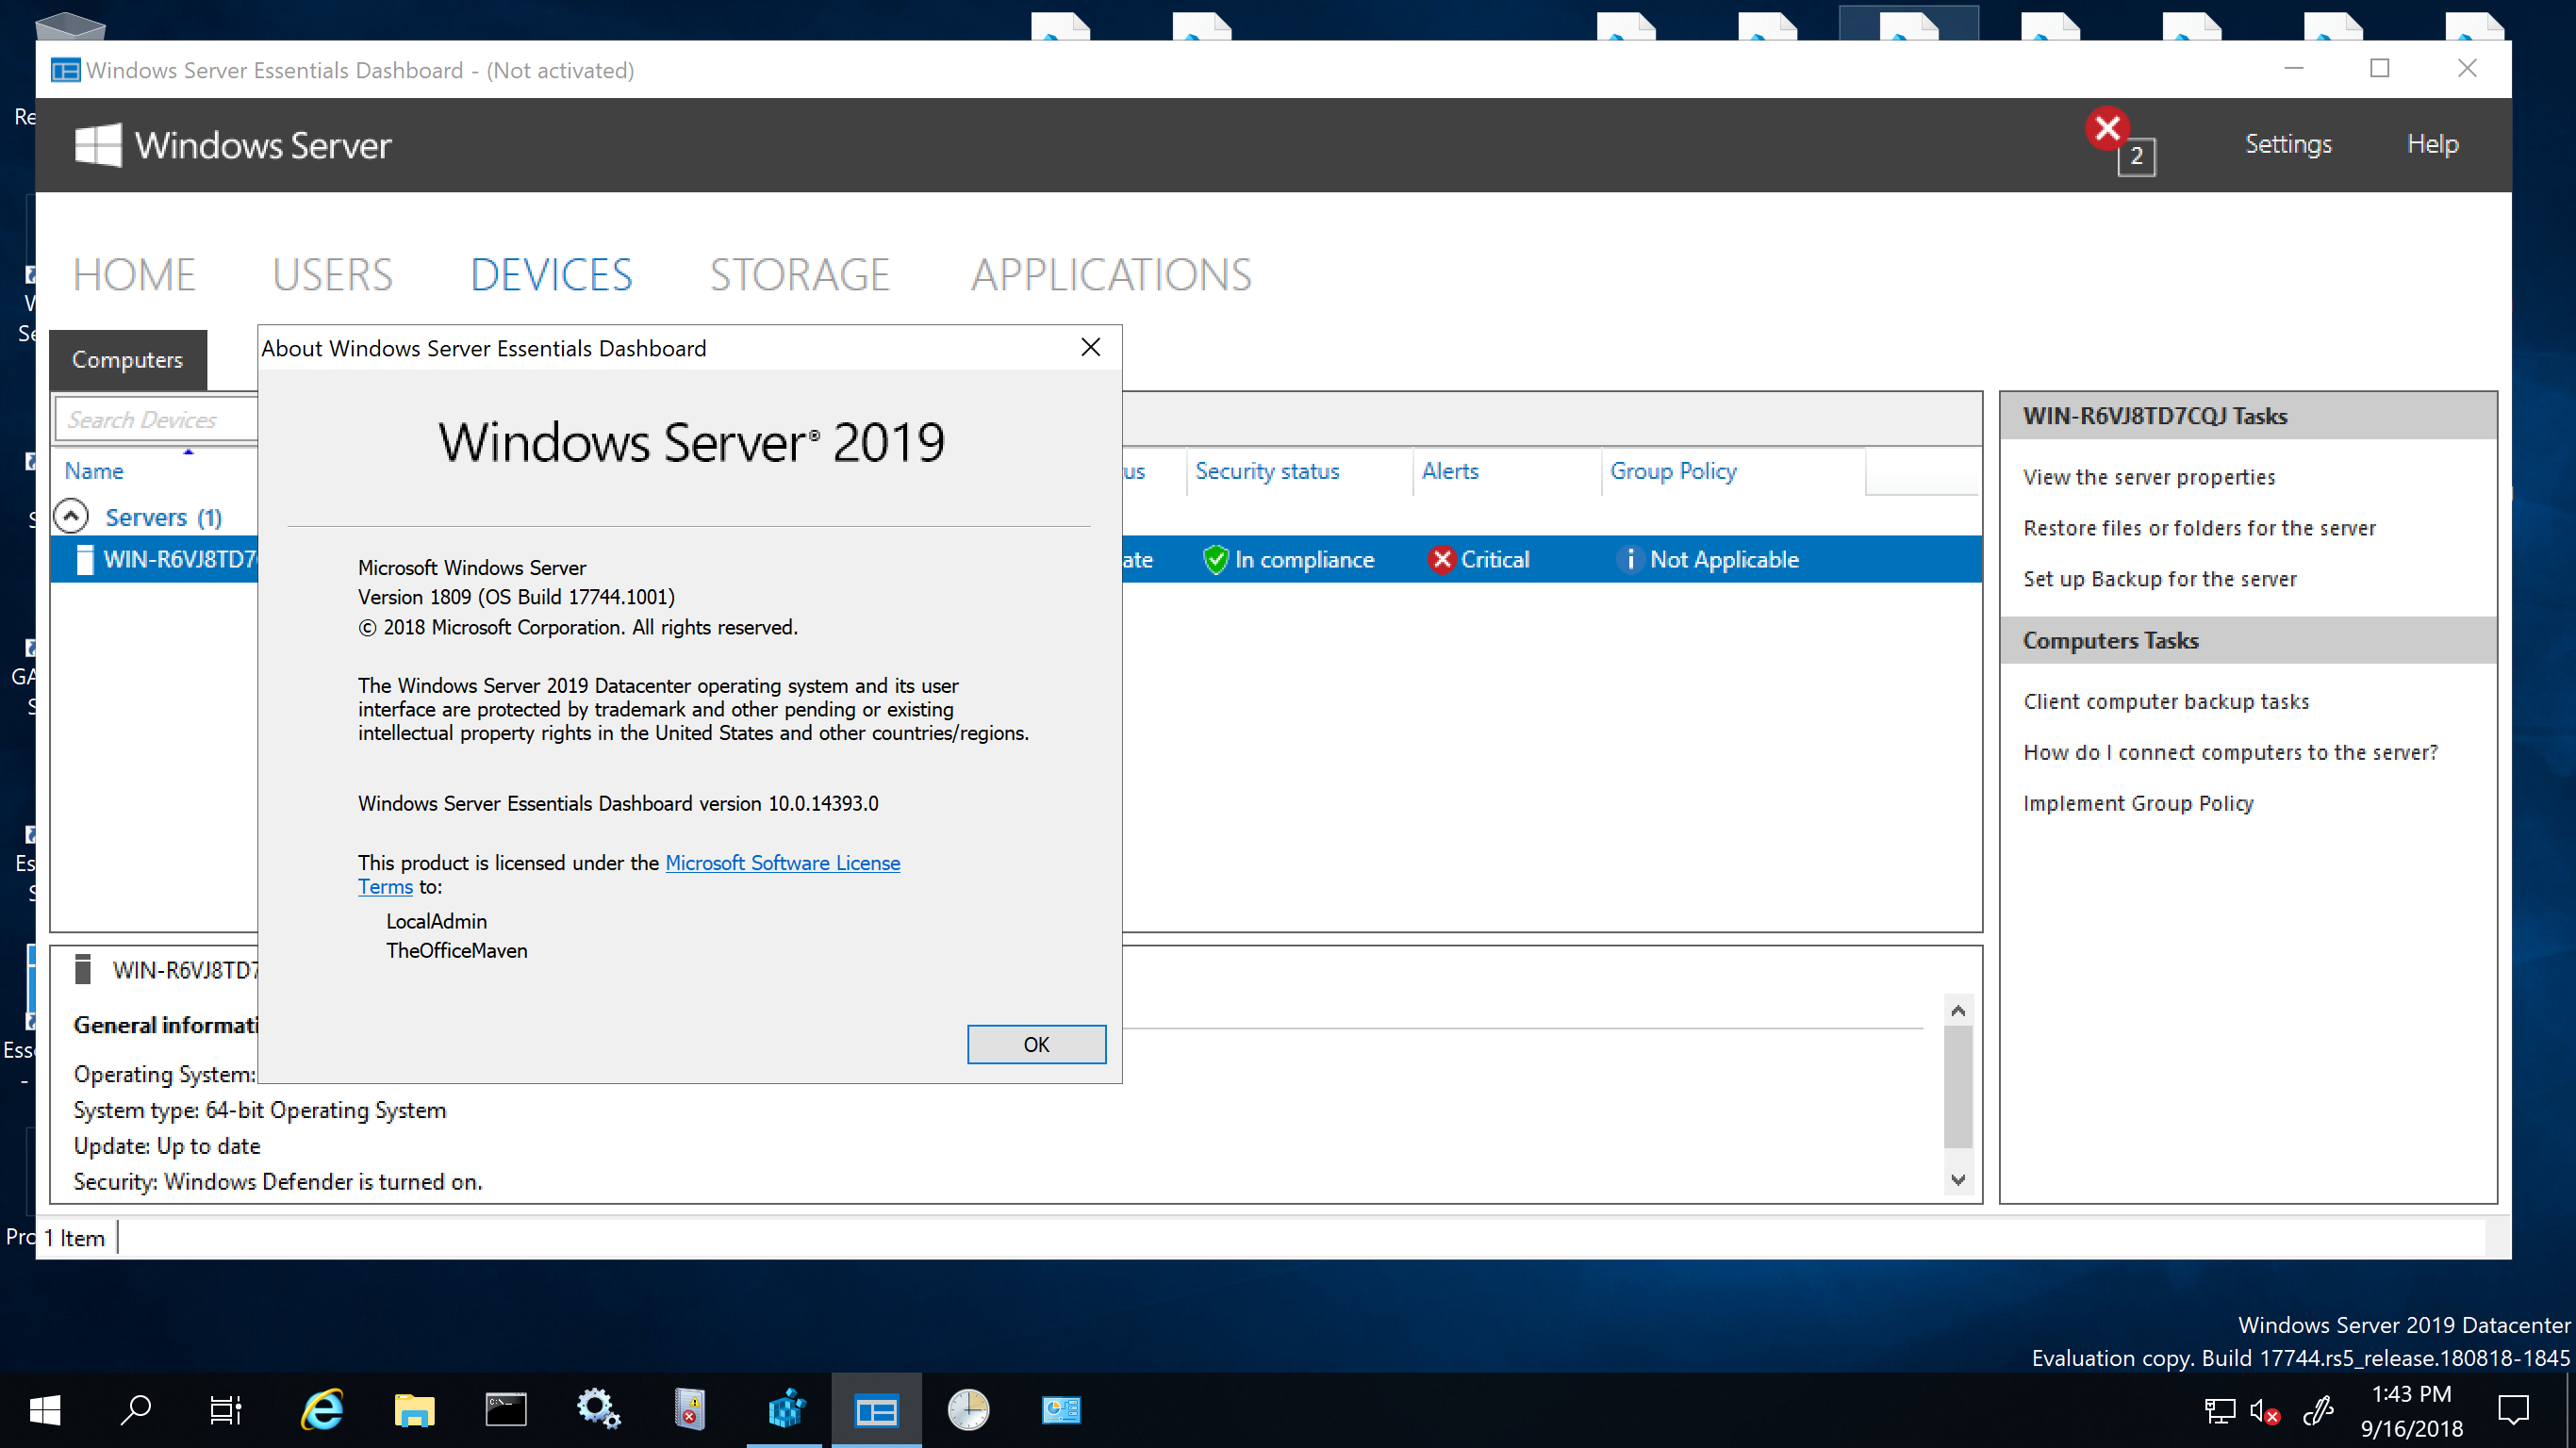 windows server 2019 essential download